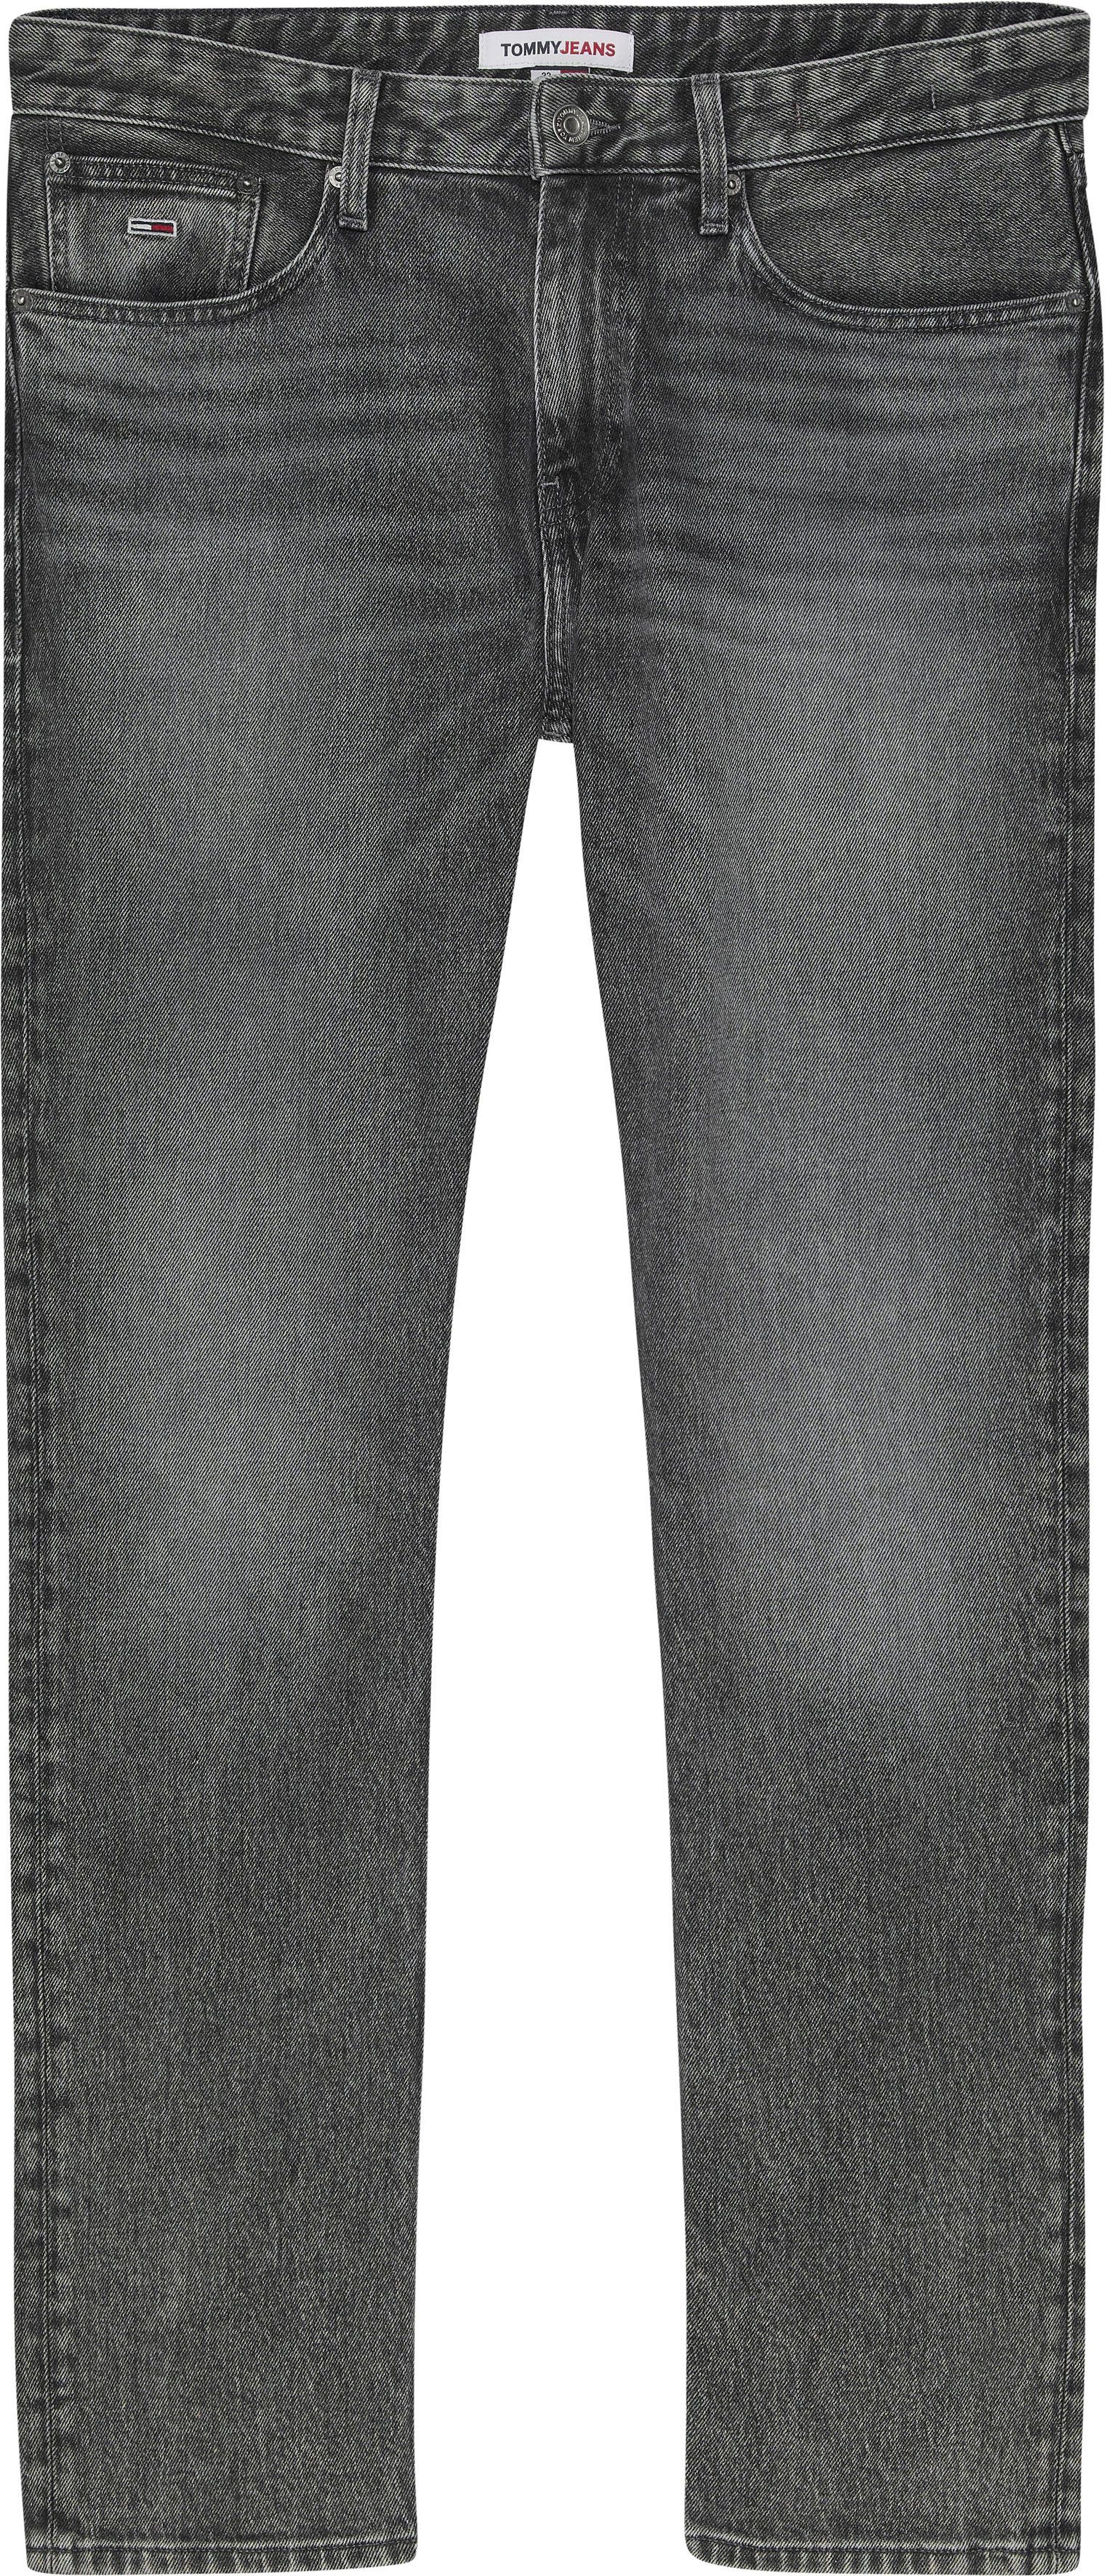 Tommy RGLR Jeans denim Straight-Jeans Tommy mit Stitching Jeans black am RYAN STRGHT Münzfach